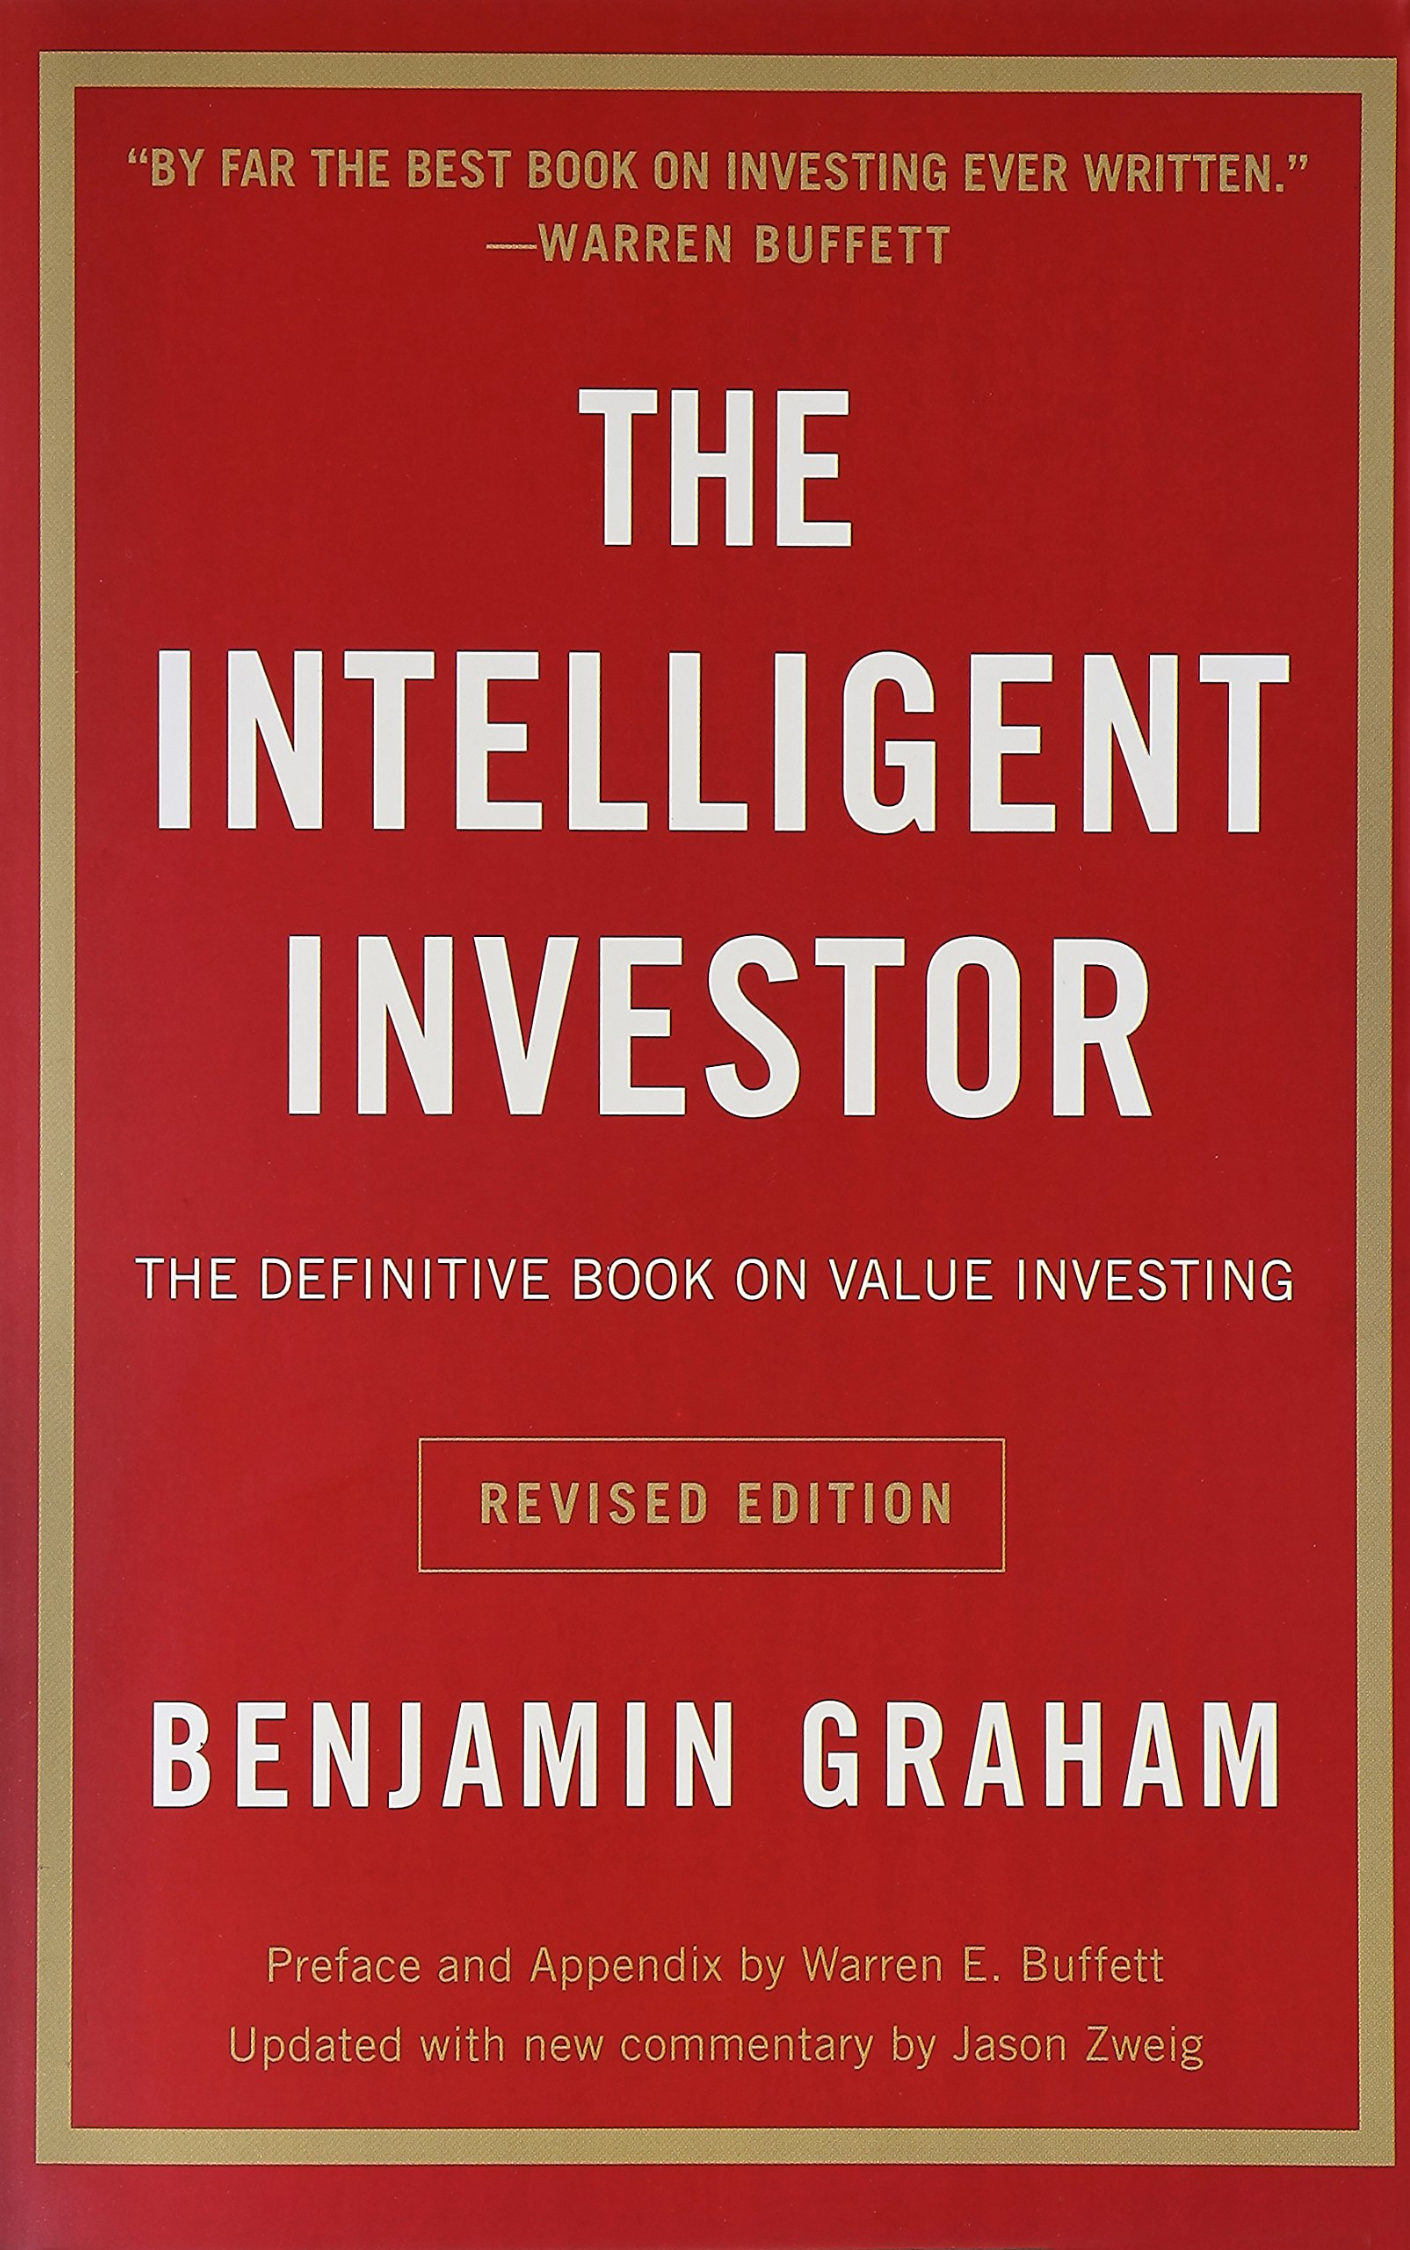 THE INTELLIGENT INVESTOR by BENJAMIN GRAHAM